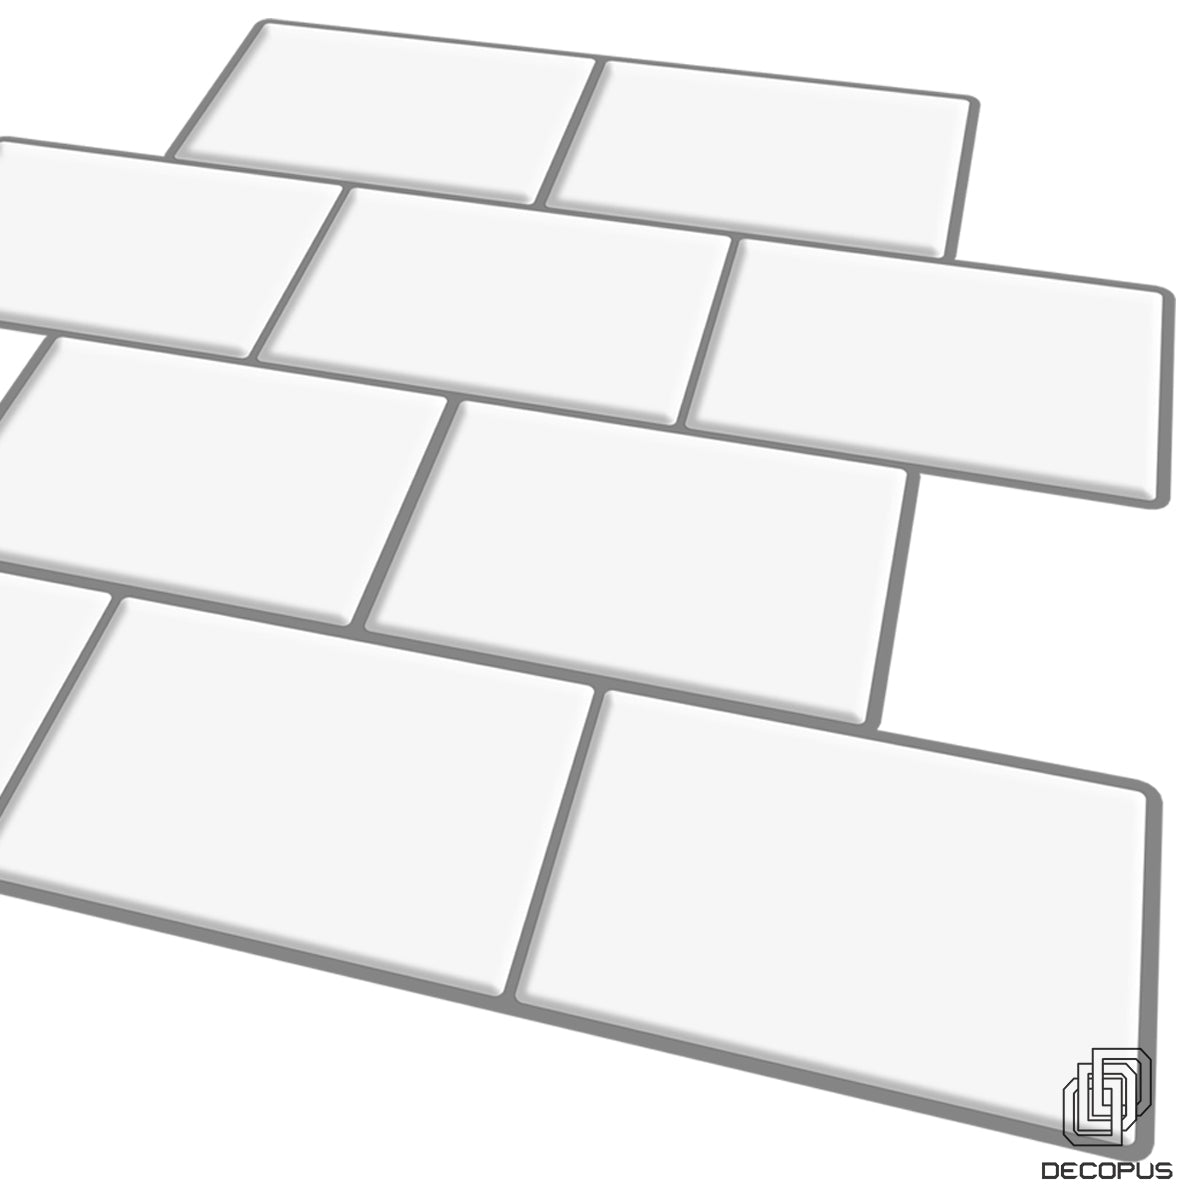 Decopus 3D Marble Tile Backsplash Peel and Stick Vinyl (Brick - Mono White 10pc/Pack) for Kitchen & Bathroom Self Adhesive Vinyl Tile